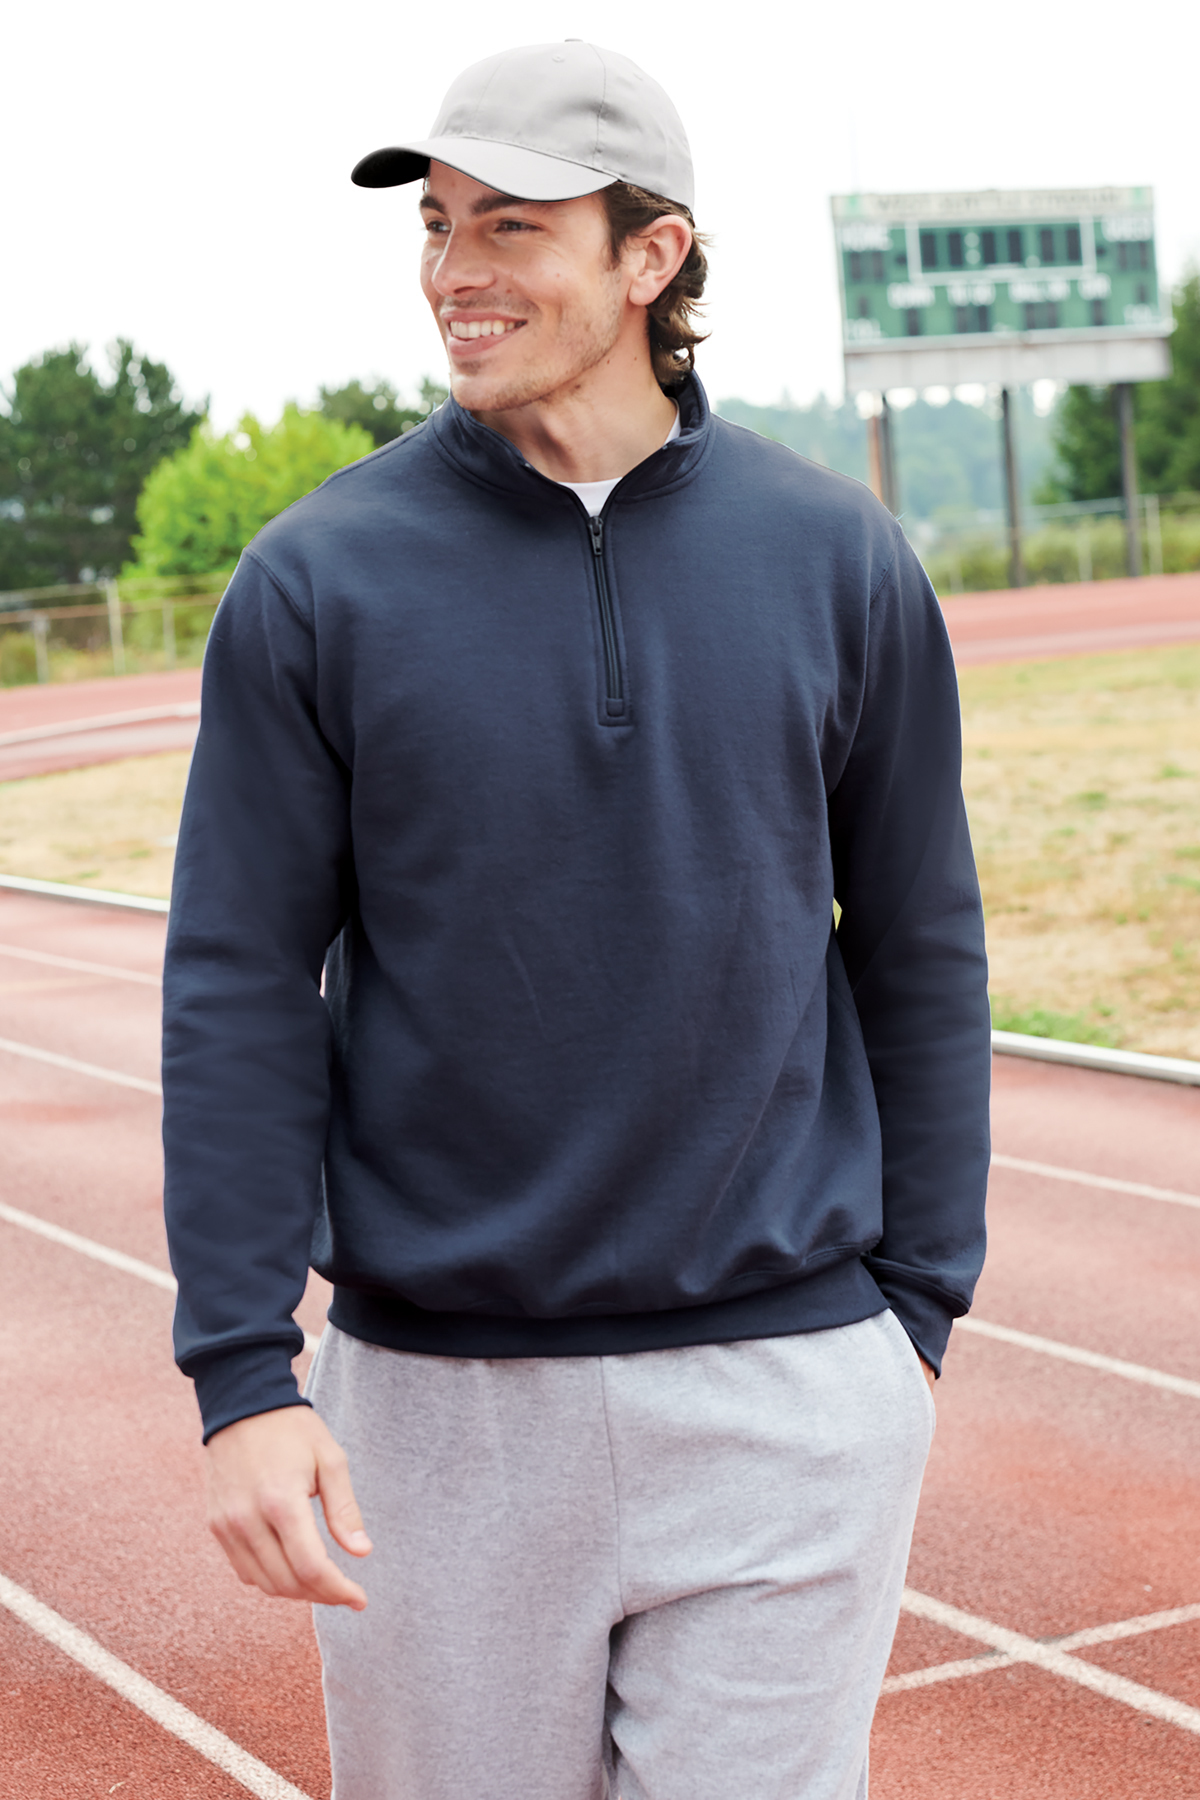 Port & Company Youth Core Fleece 1/4-Zip Pullover Sweatshirt, Product